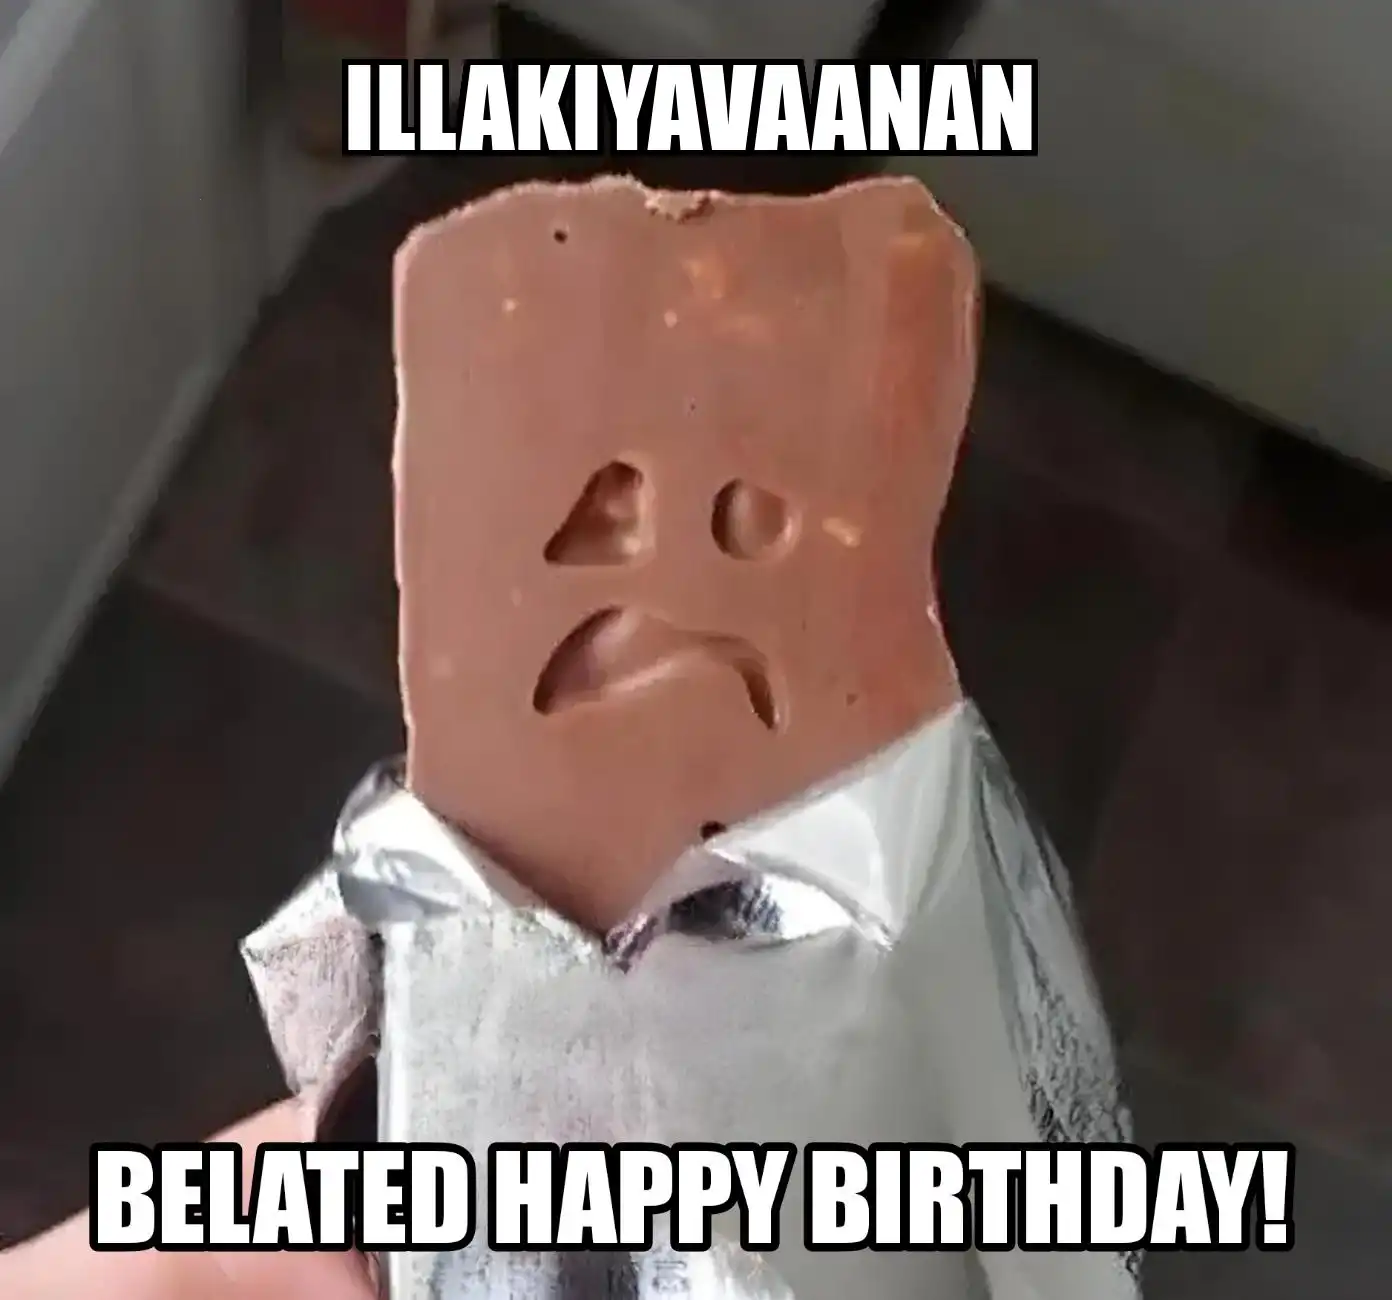 Happy Birthday Illakiyavaanan Belated Happy Birthday Meme